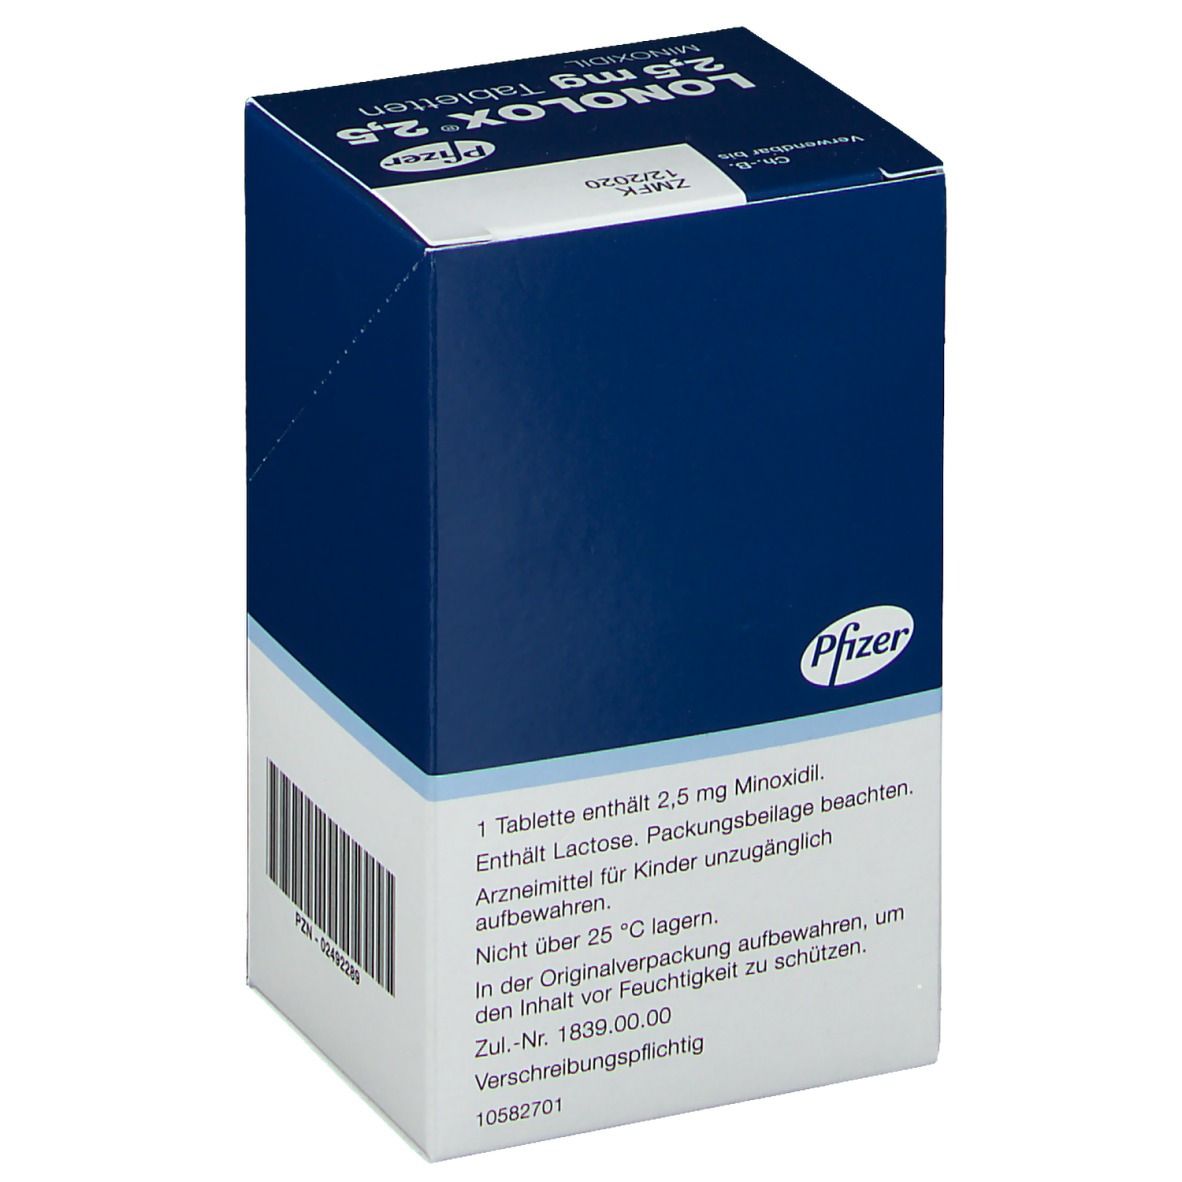 LONOLOX® 2,5 mg